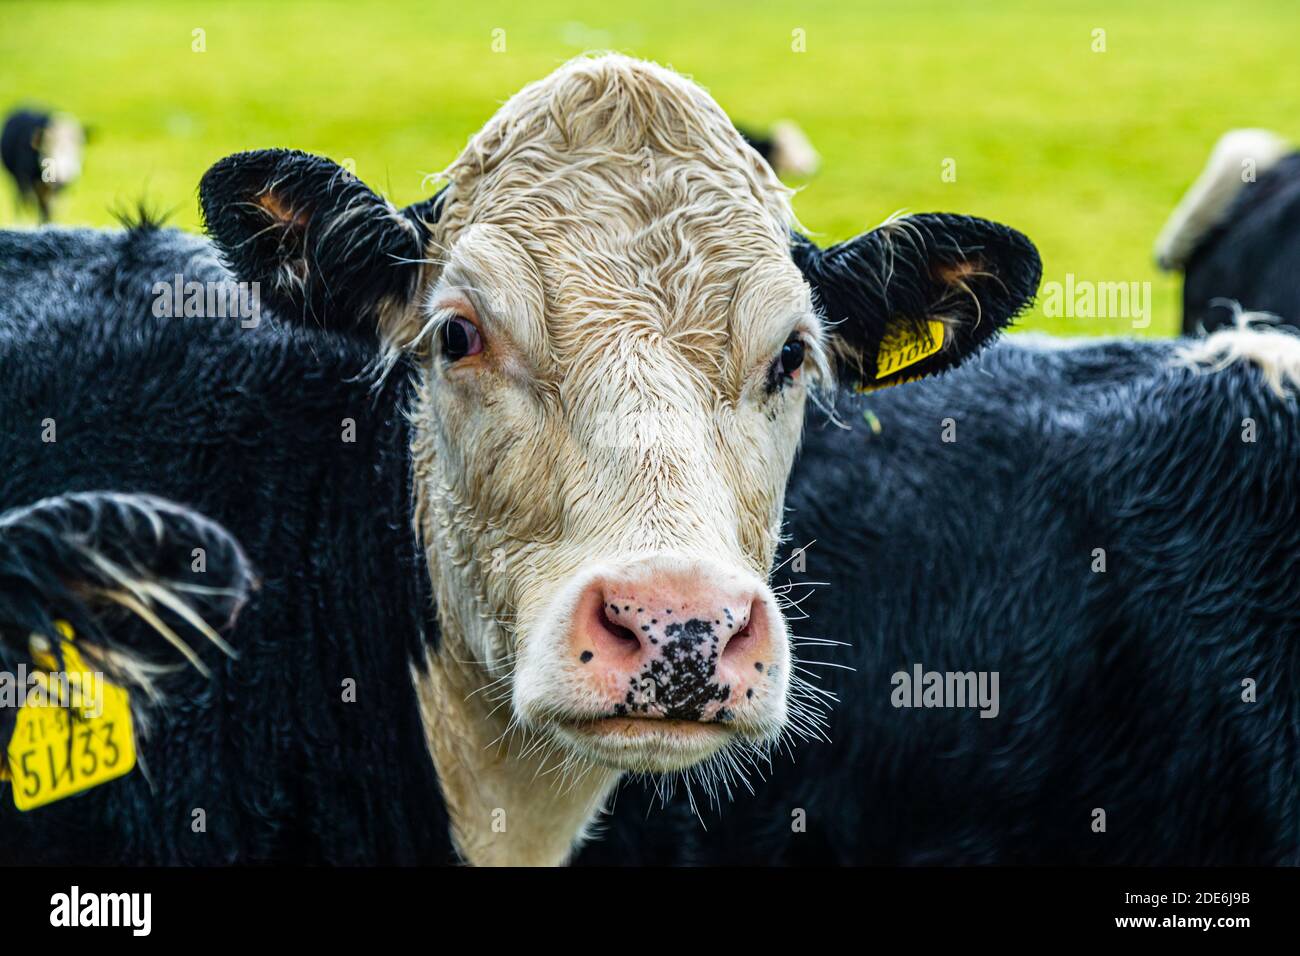 Cows in Ireland Stock Photo